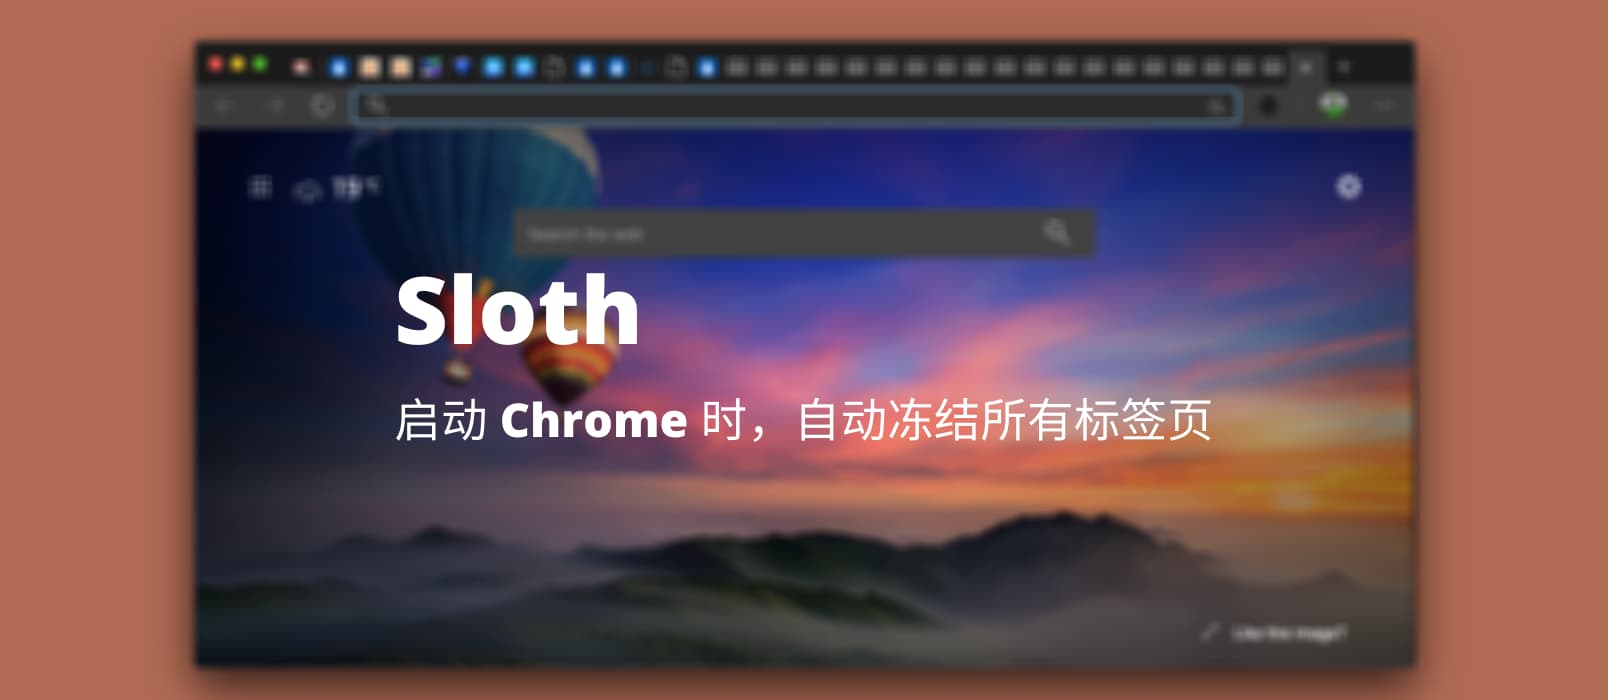 Sloth - 启动 Chrome 时，自动冻结所有标签页，减少内存占用 1